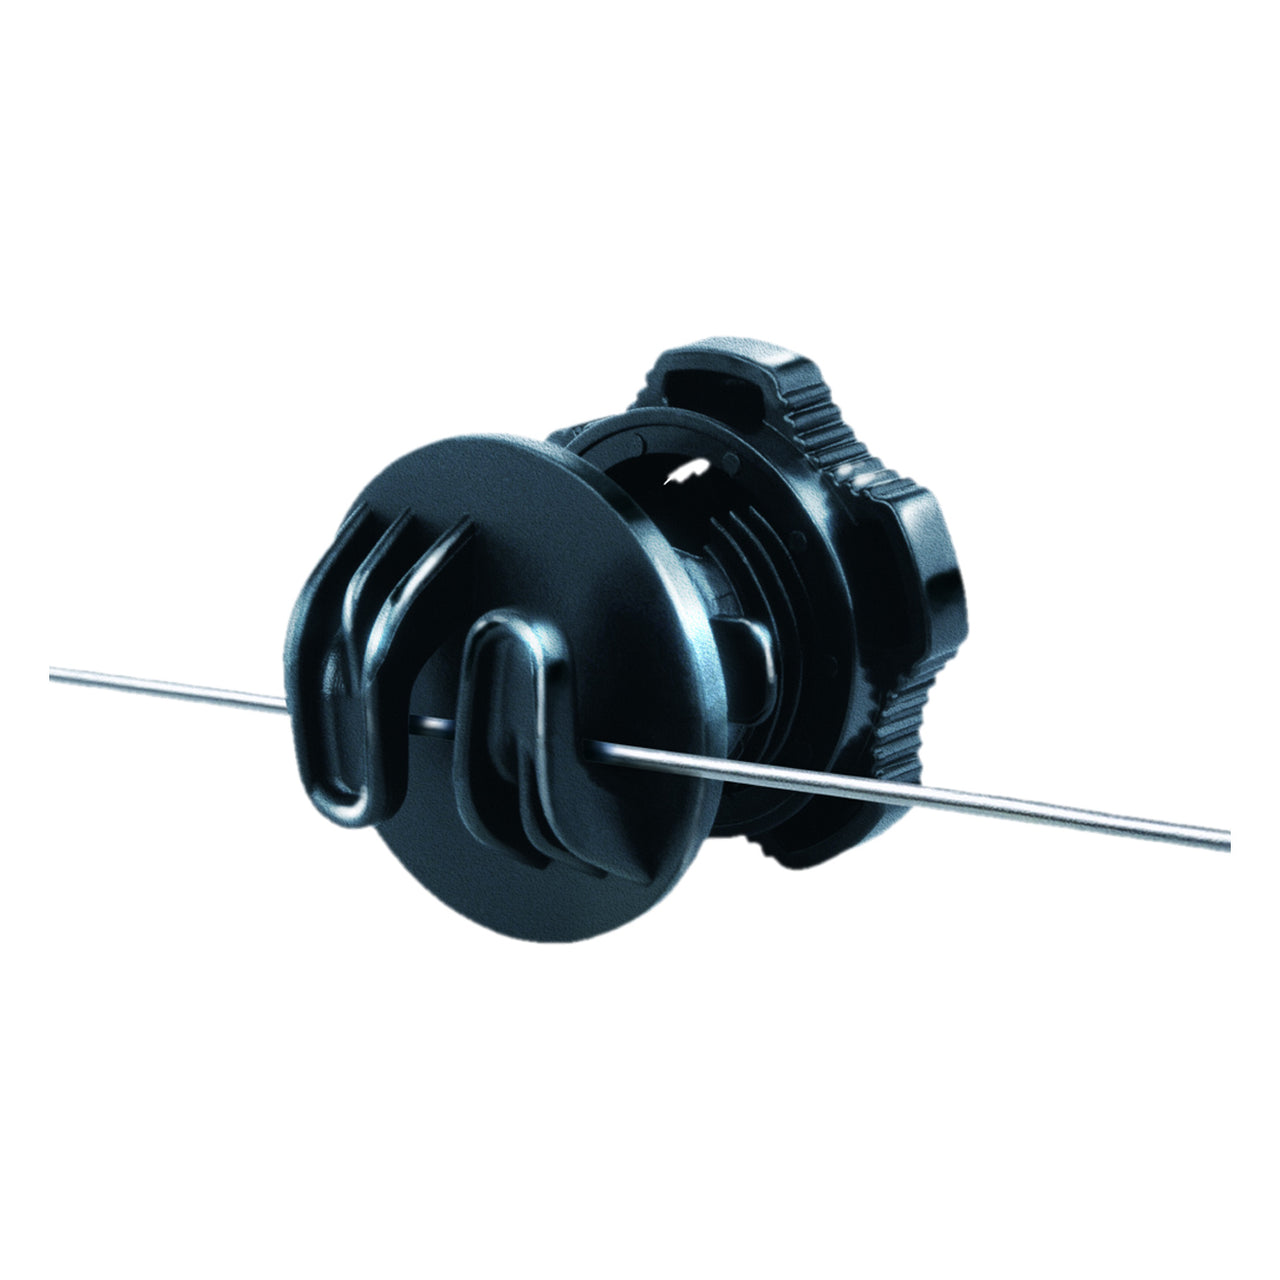 Speedrite Multi-Fit Rod Post Insulator (For 1/4 - 5/8 Rods) (25 Pack) - Fencing Speedrite - Canada